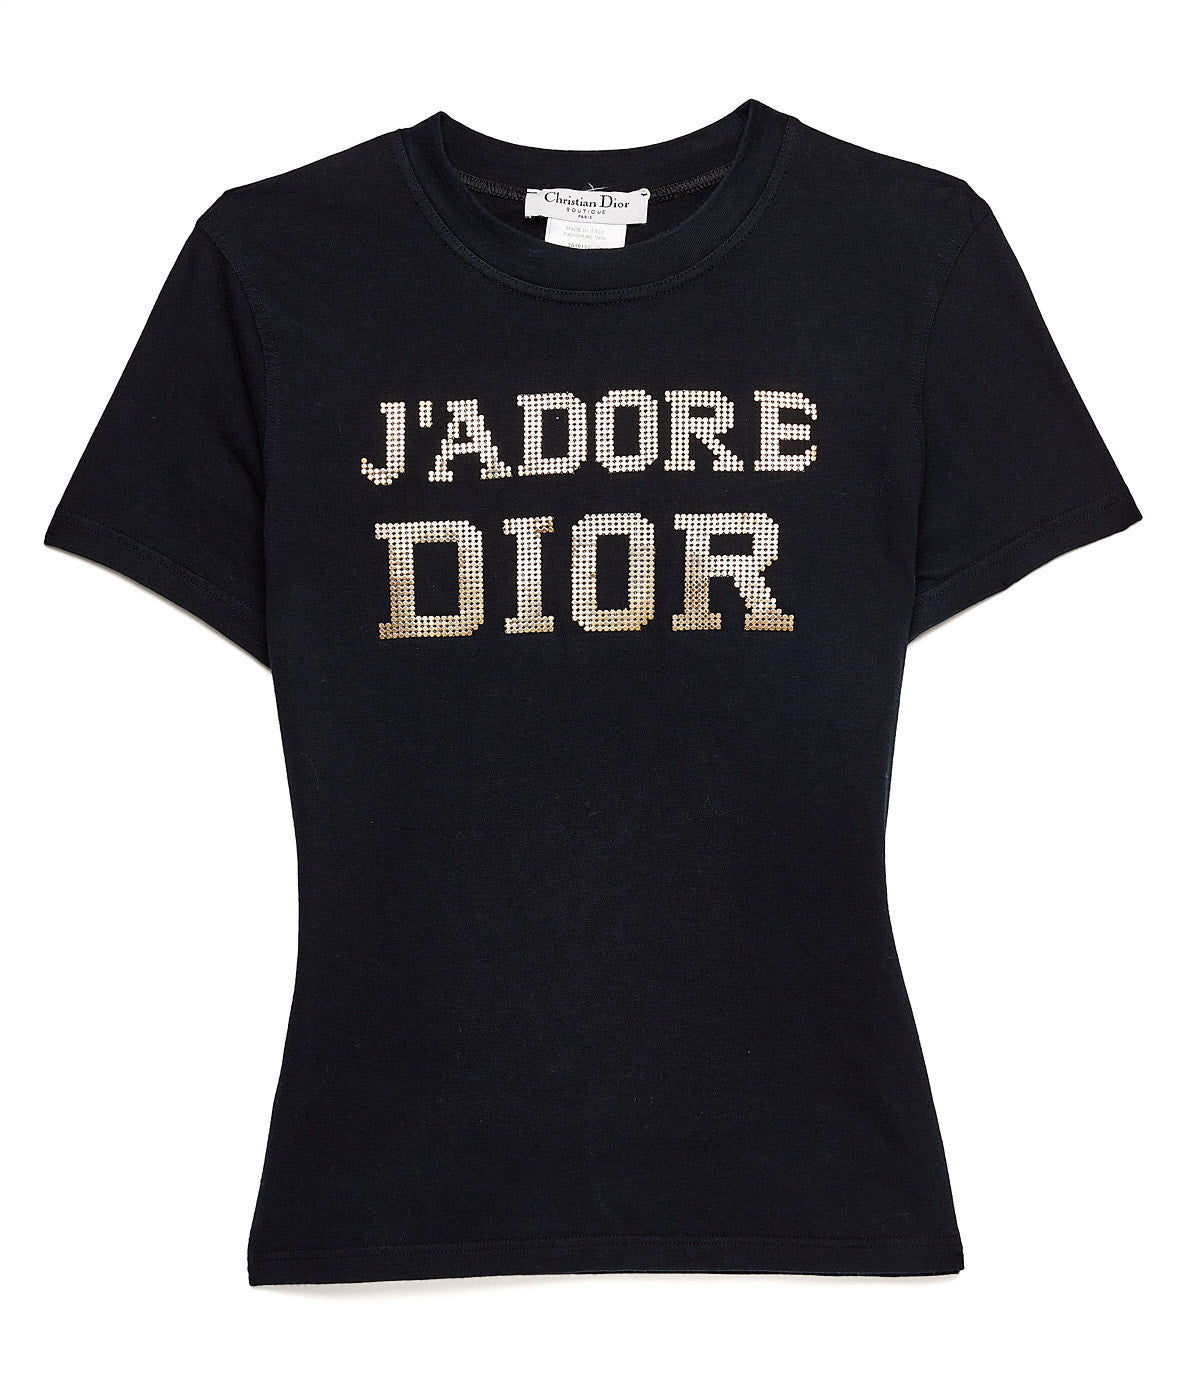 Chasing Davies Carrie Bradshaws JAdore Dior 8 TShirt